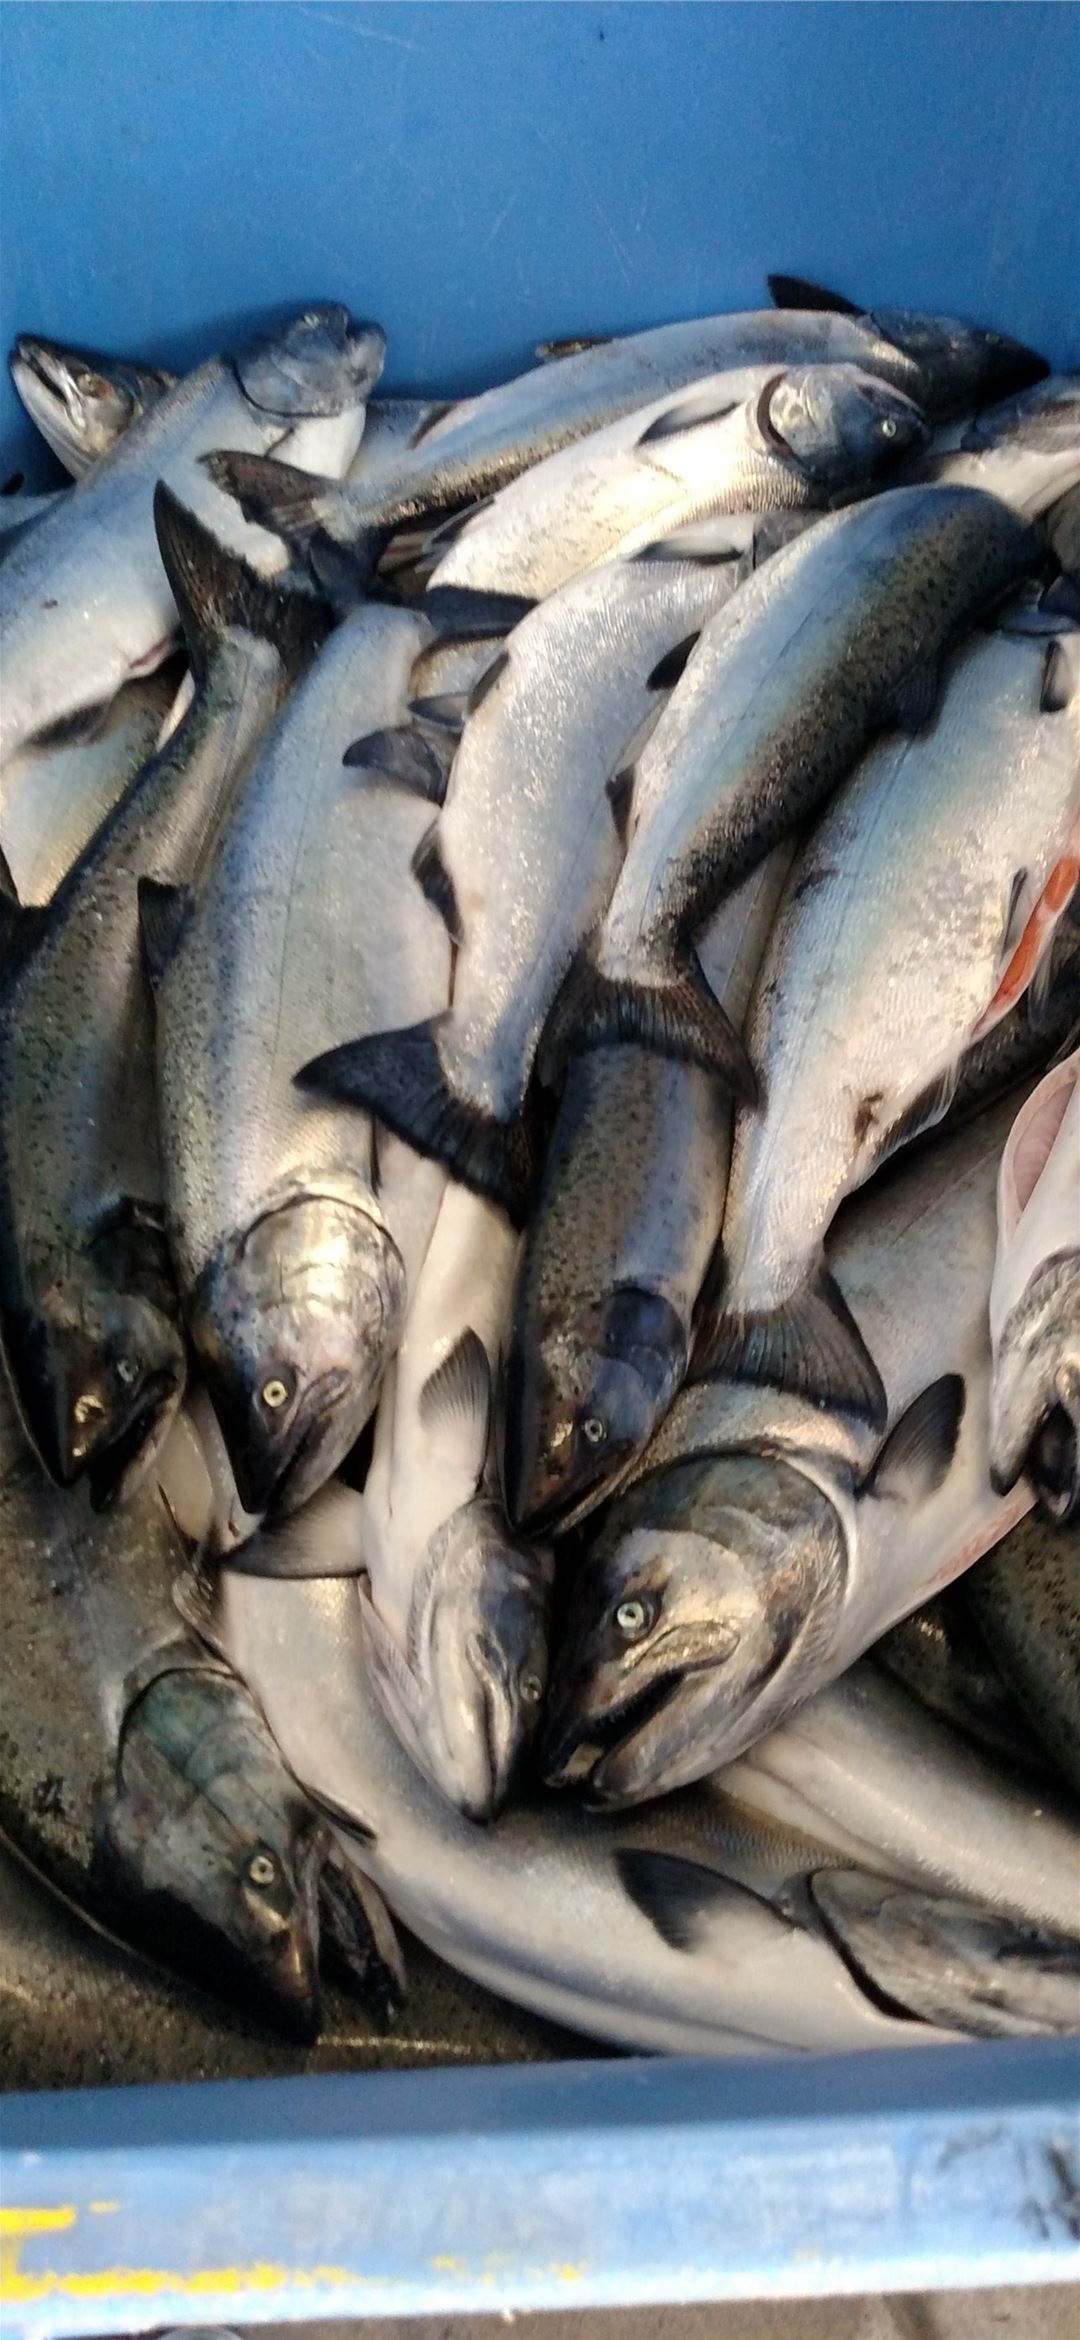 salmon fish iPhone Wallpaper Free Download